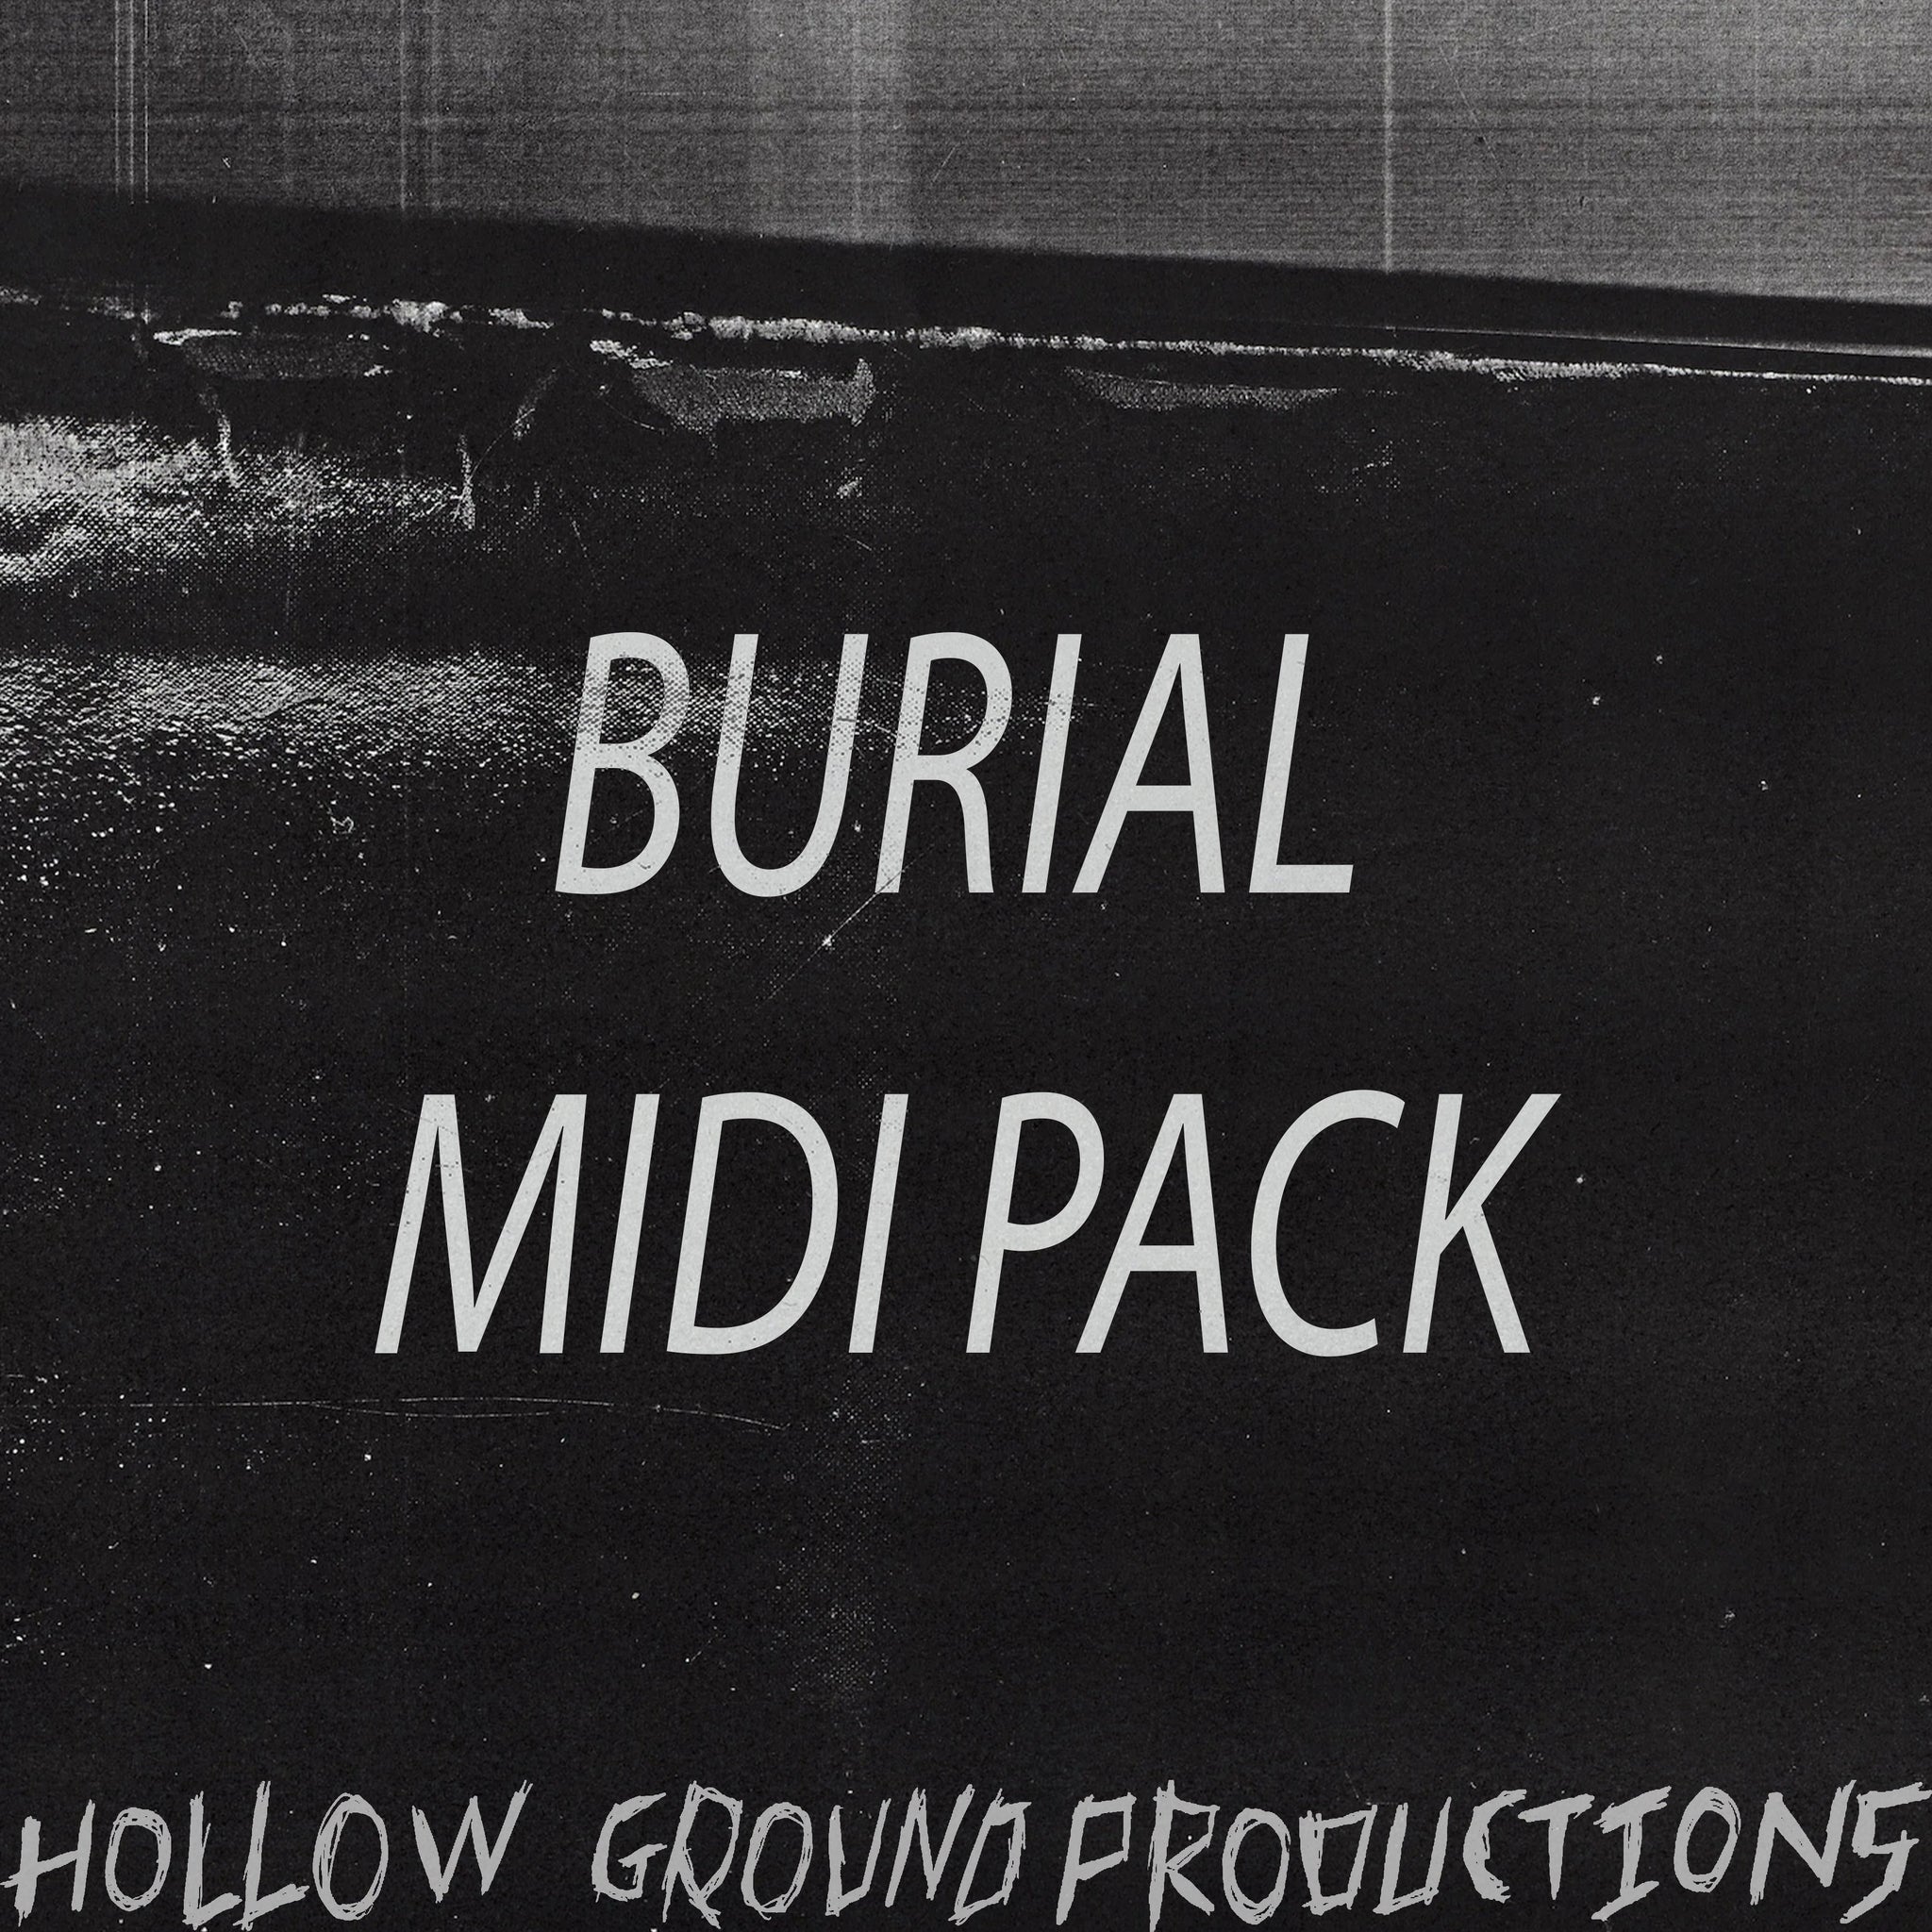 Burial Midi Pack - Hollow Ground Productions (Wukah) - Scraps Audio